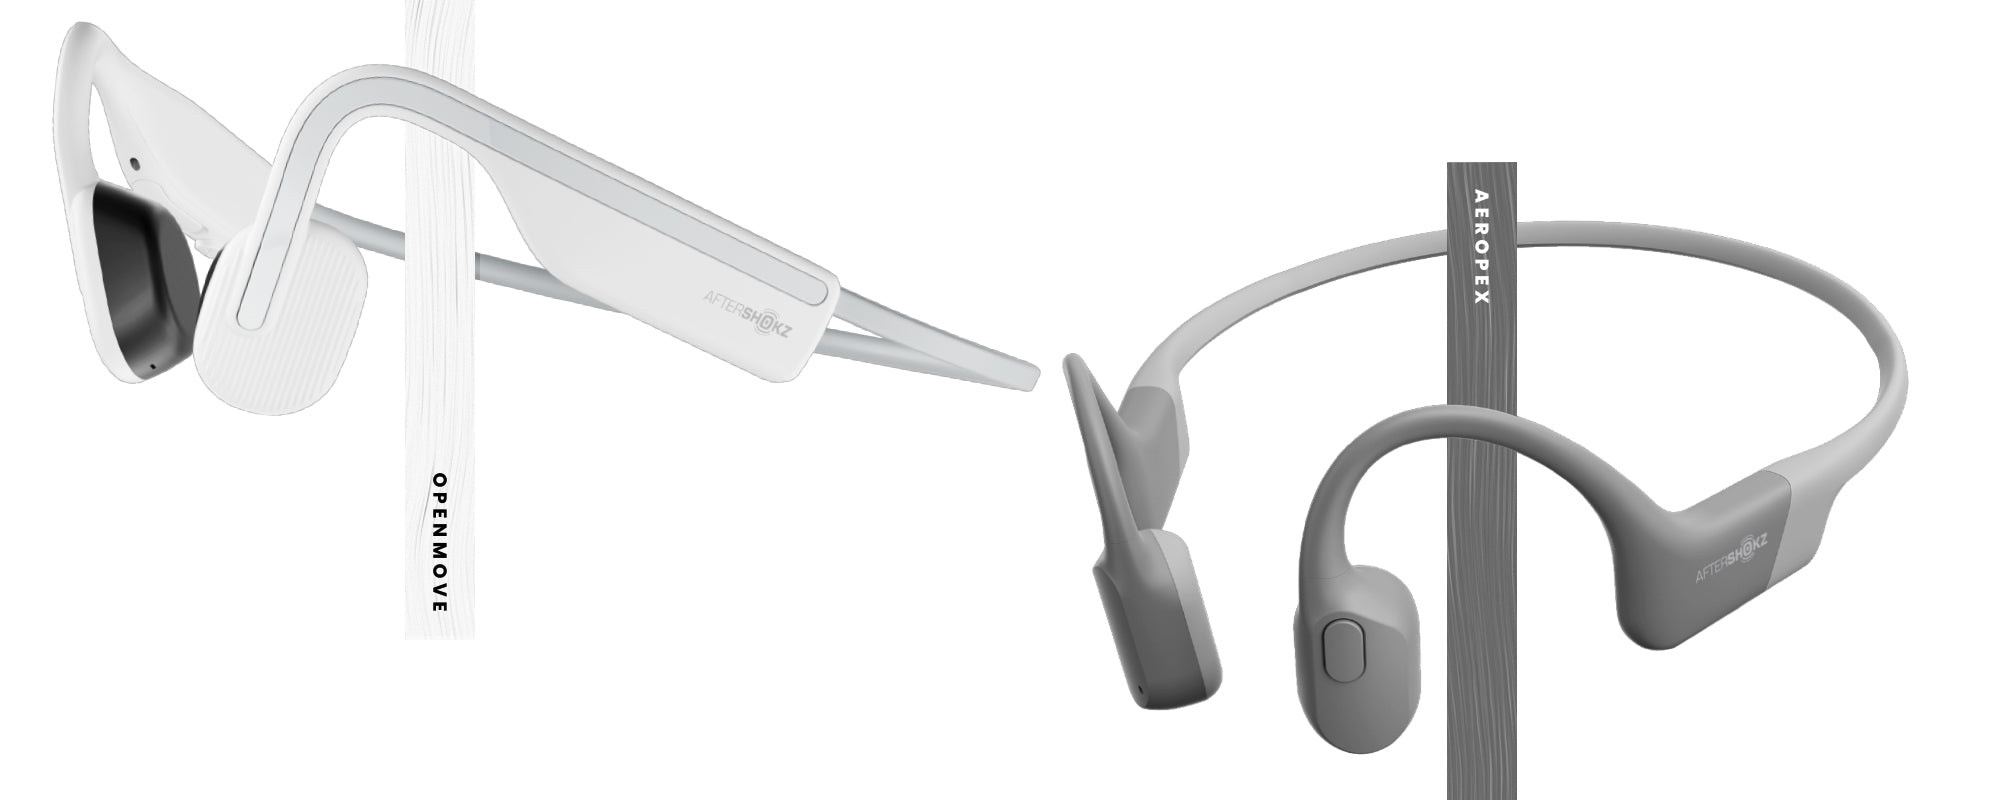 Product images of AfterShokz OpenMove headphones and AfterShokz Aeropex headphones